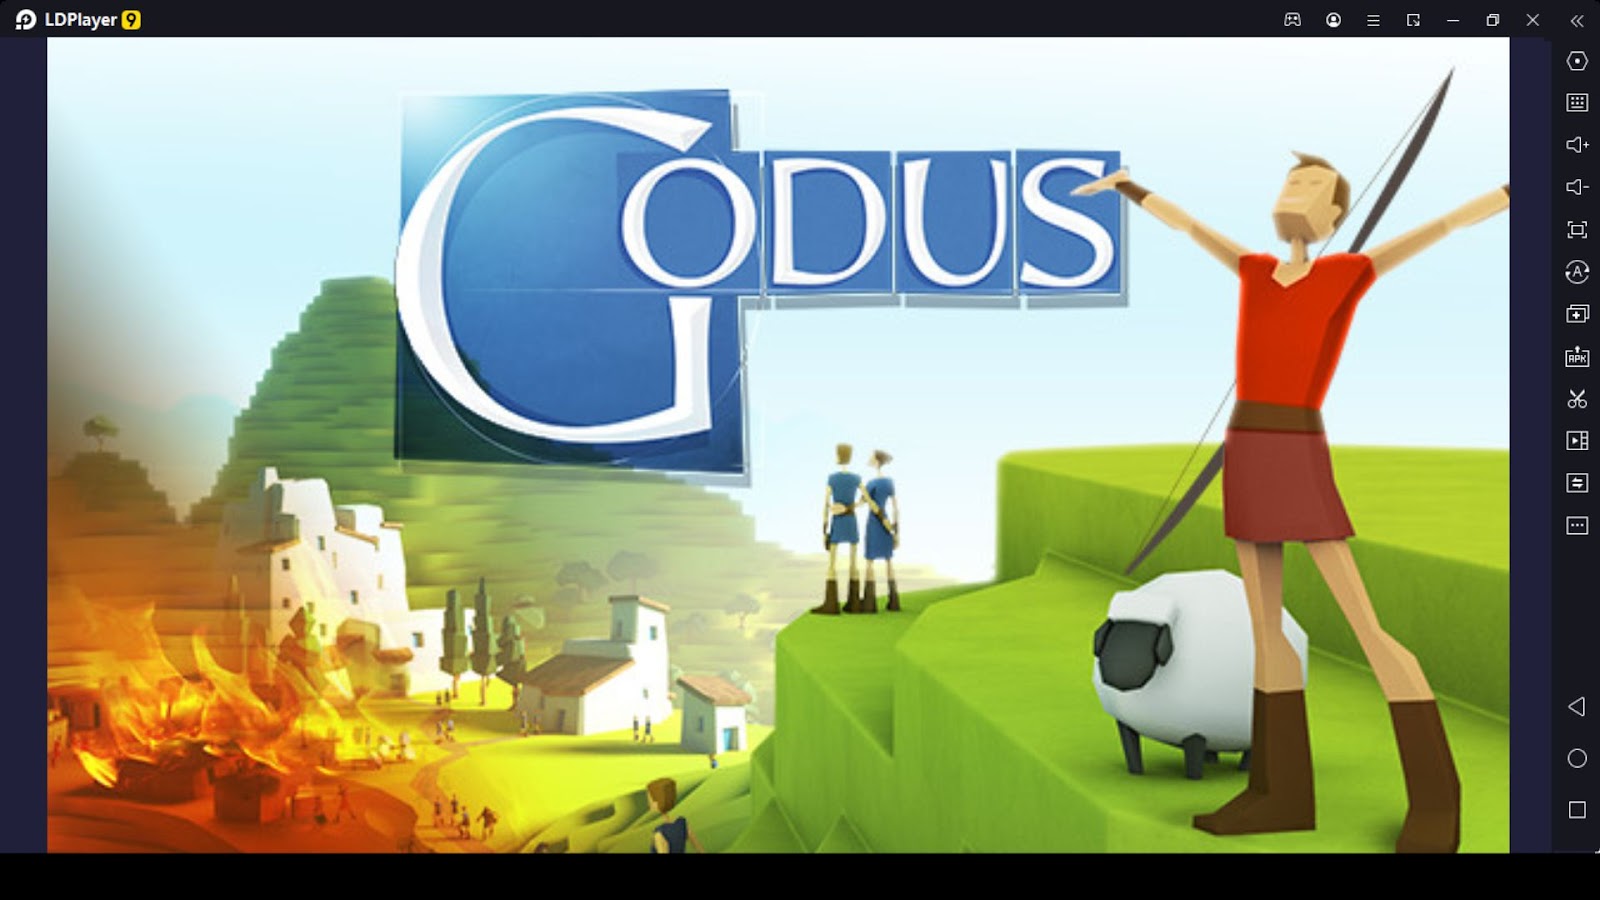 Godus - Start Playing God